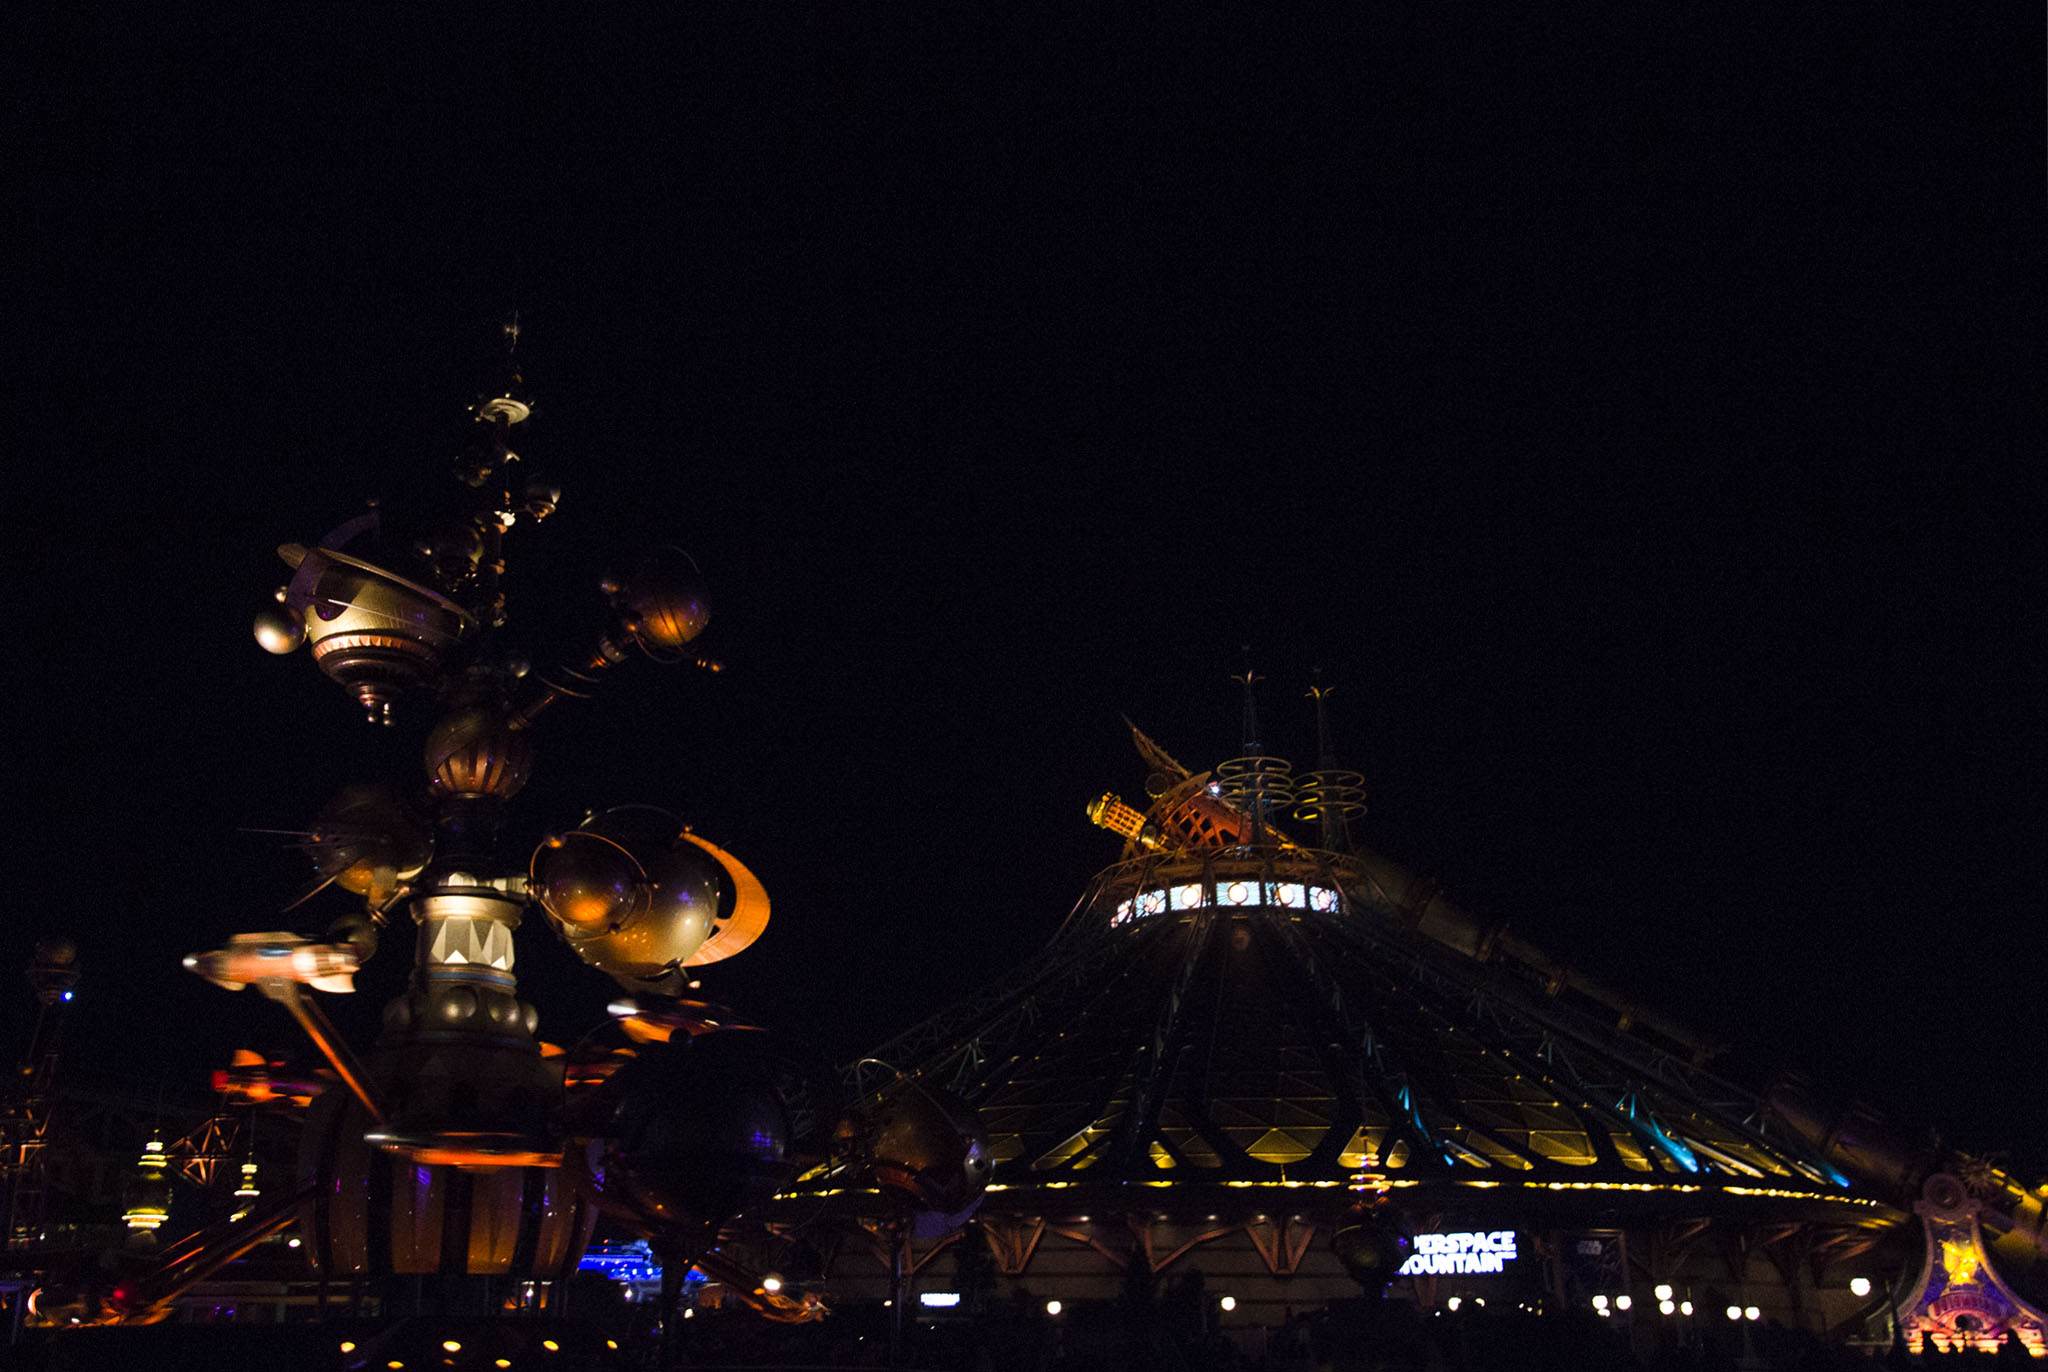 À Disneyland Paris : Hyper Space Mountain by night